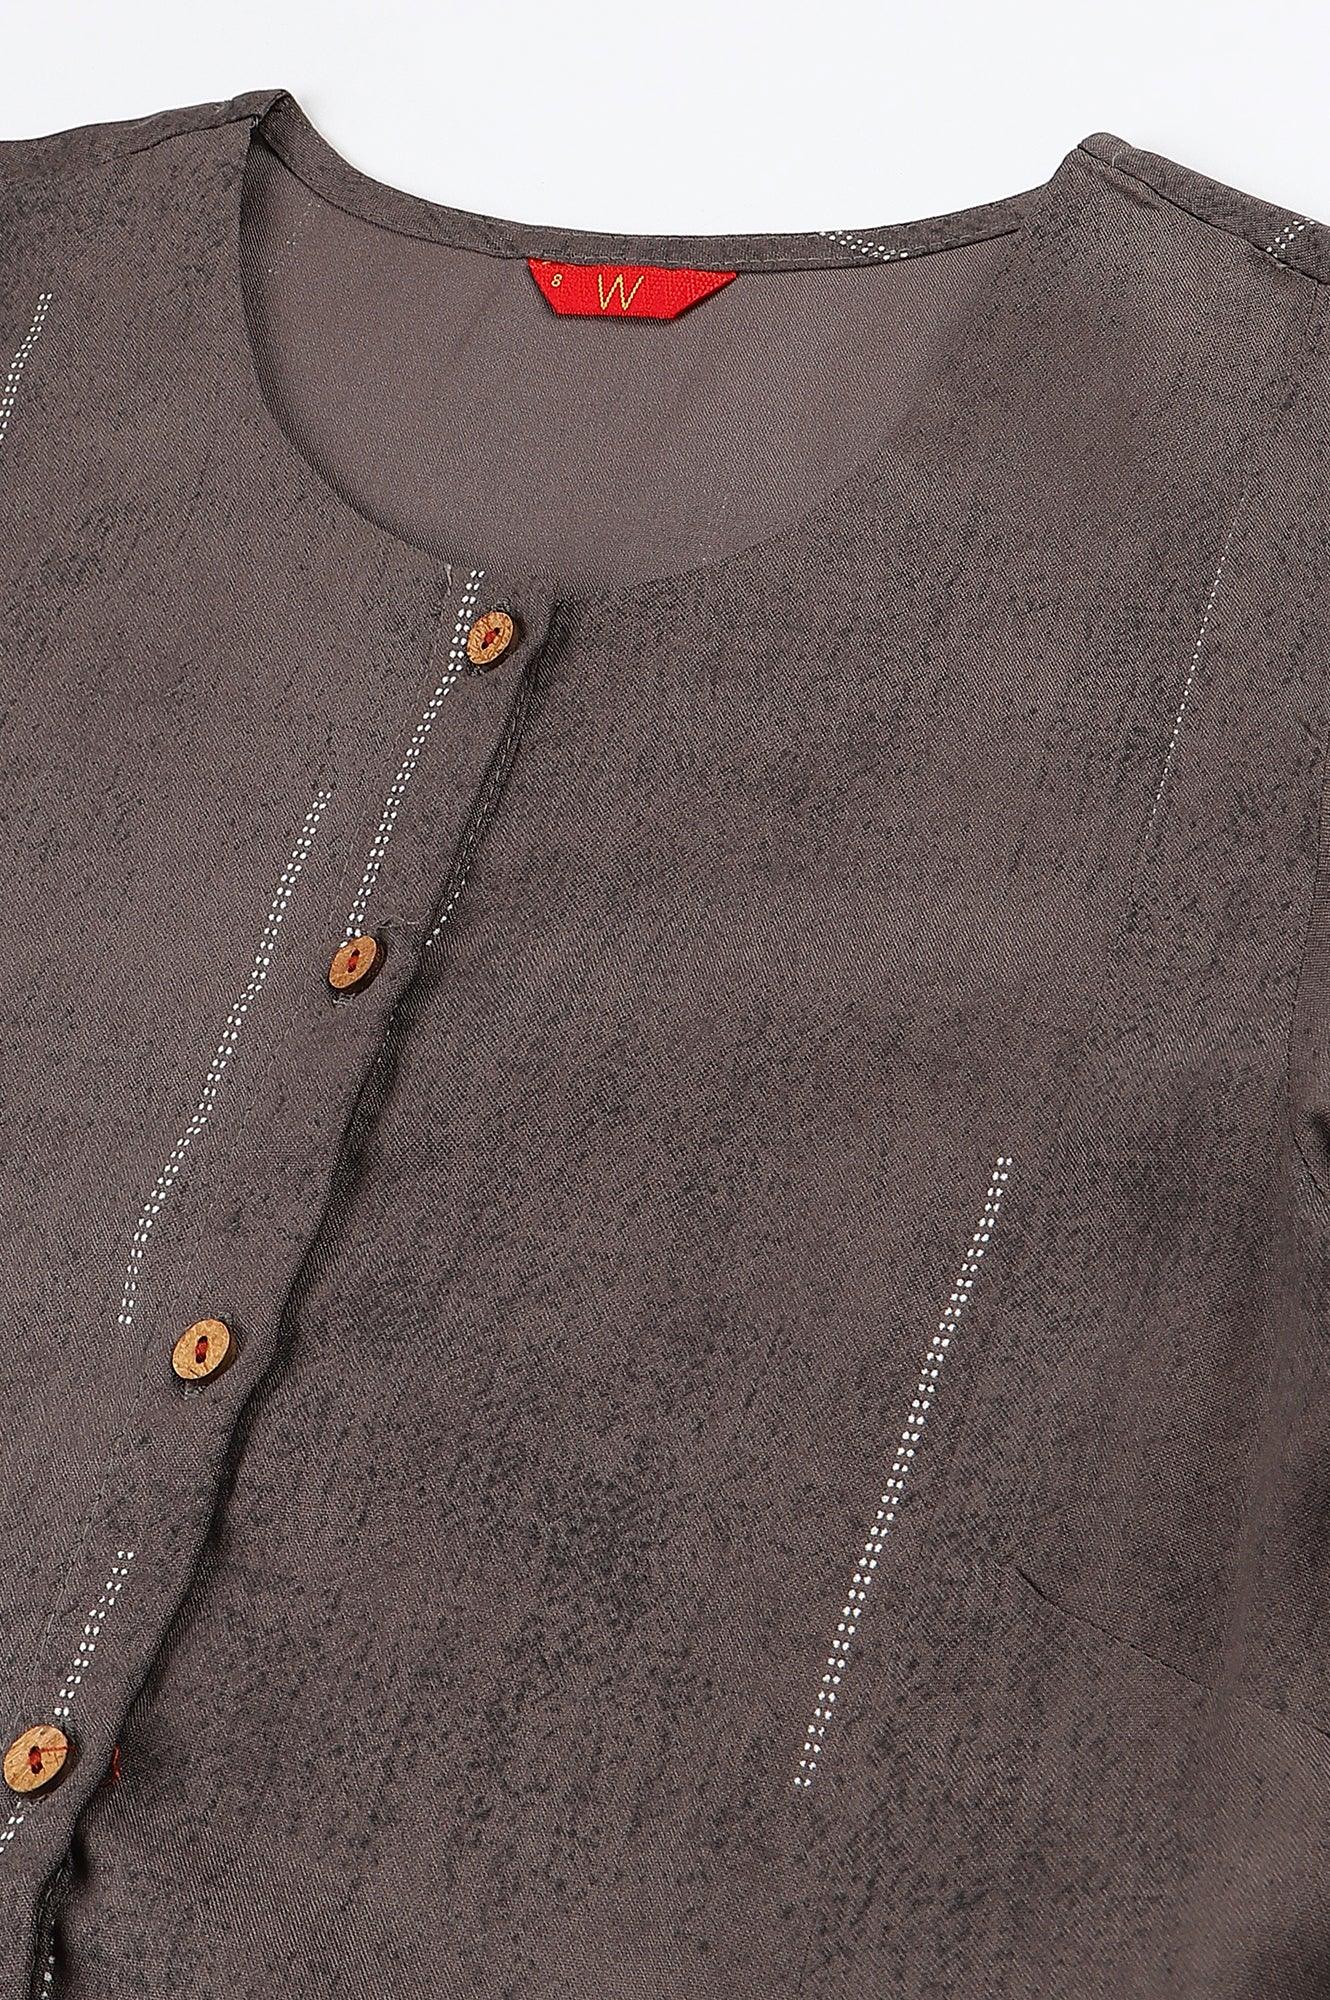 Charcoal Grey Button Down Pleated kurta - wforwoman